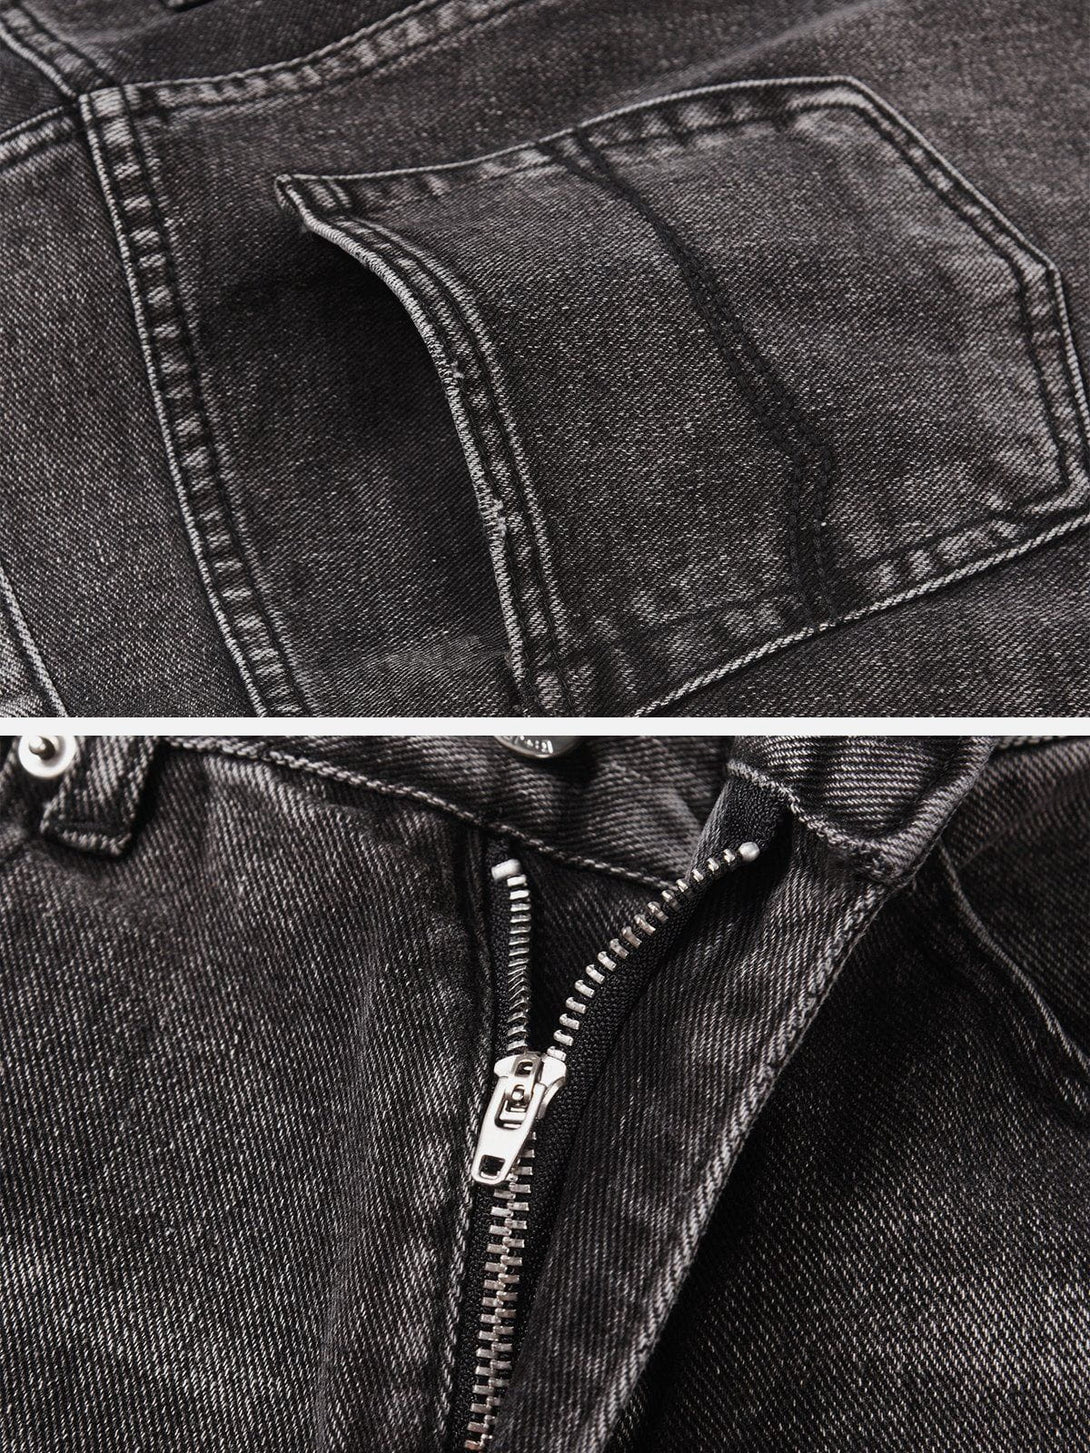 Levefly - Vintage Washed Distressed Jeans - Streetwear Fashion - levefly.com